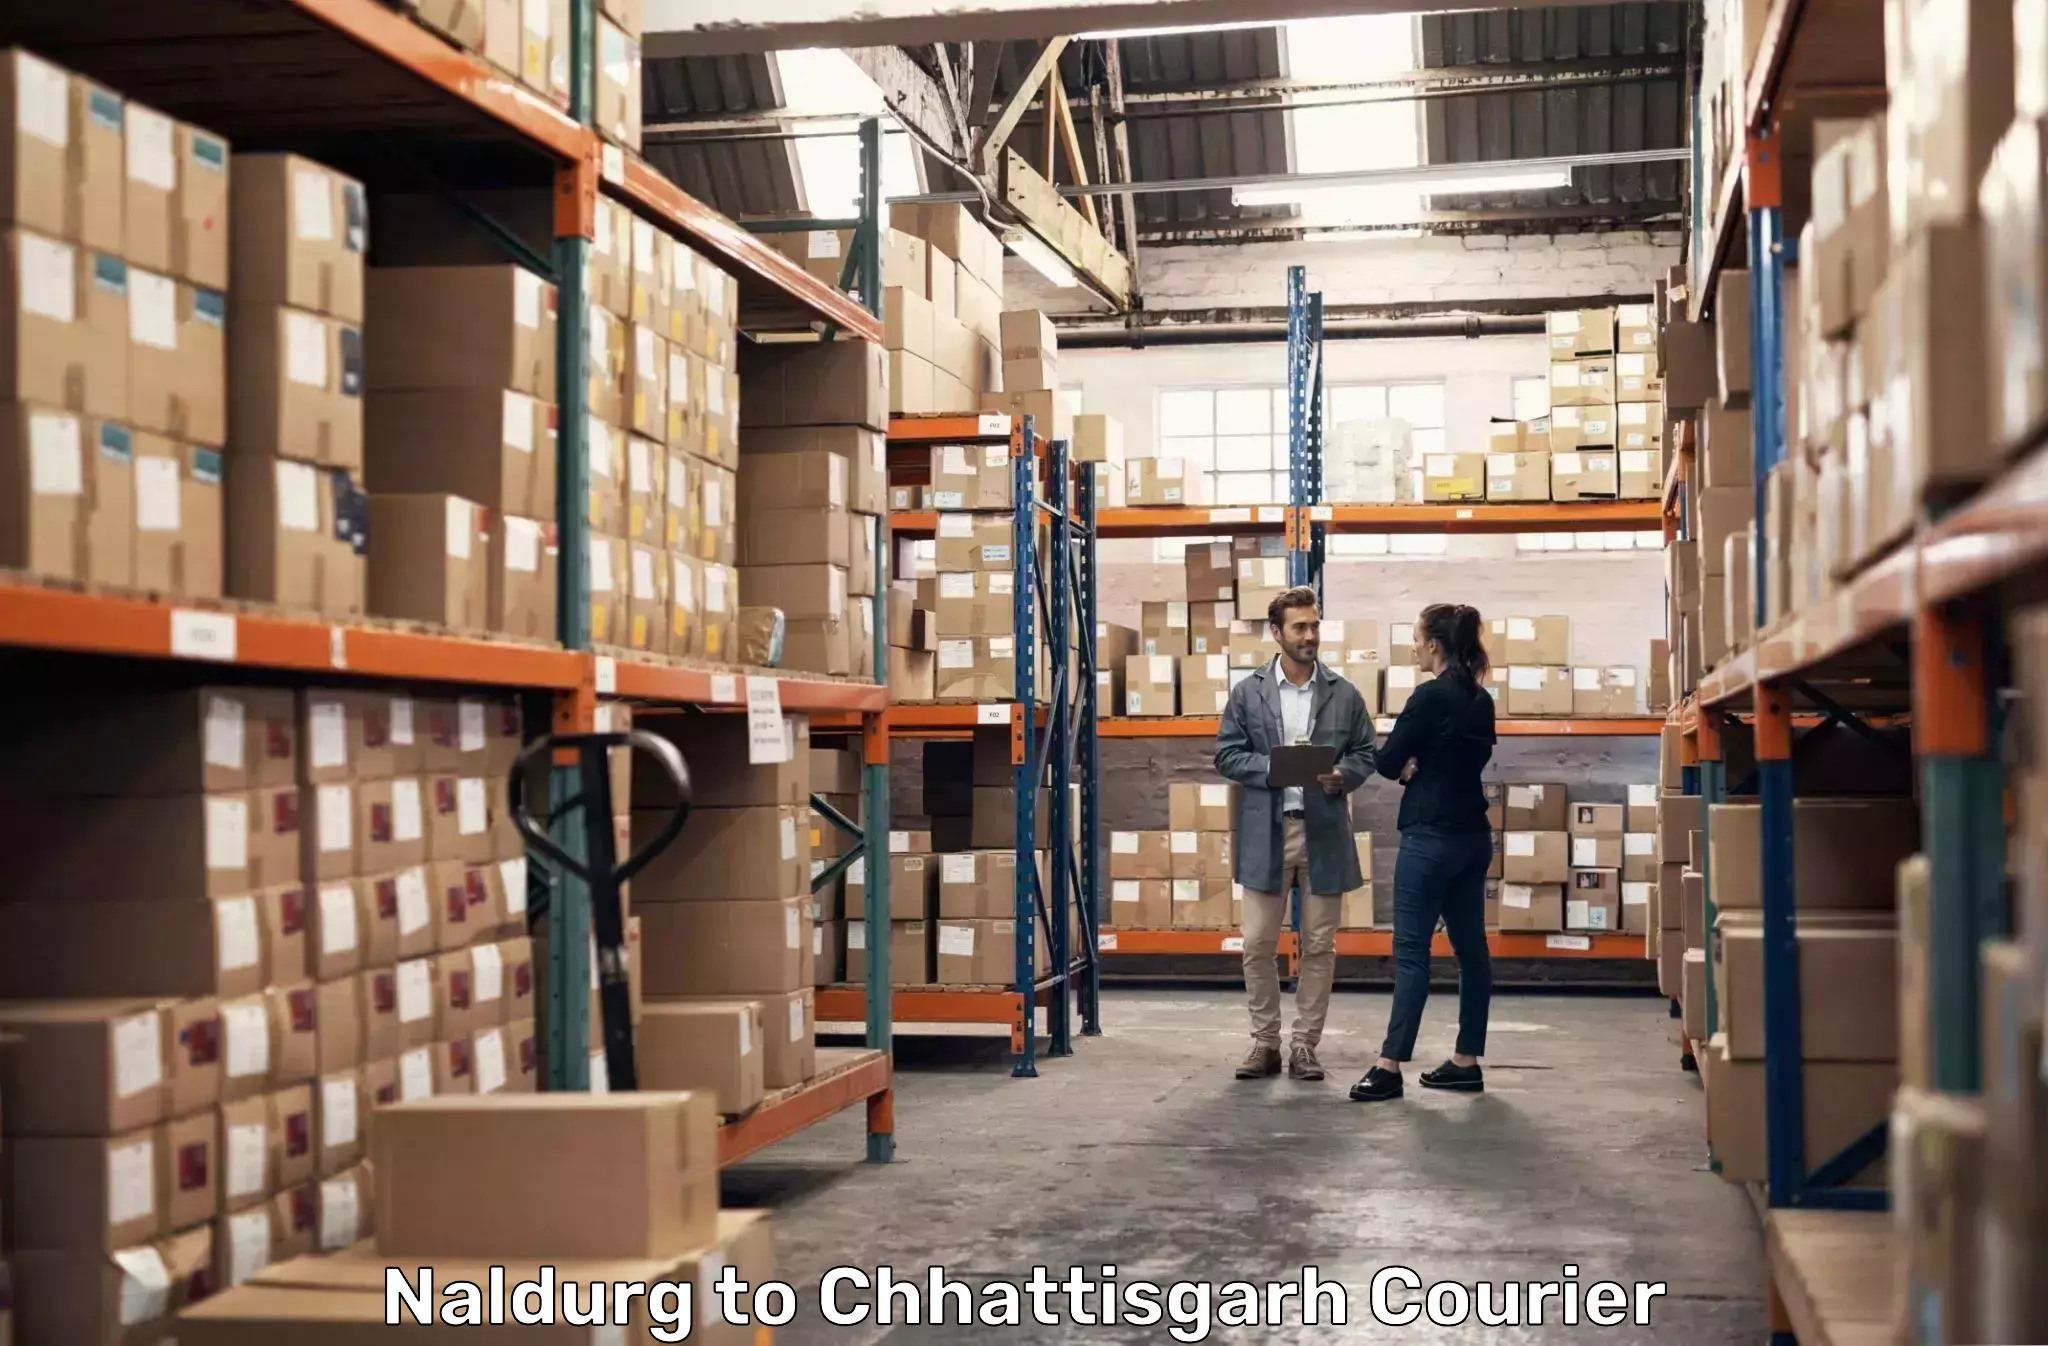 Global courier networks Naldurg to Charama